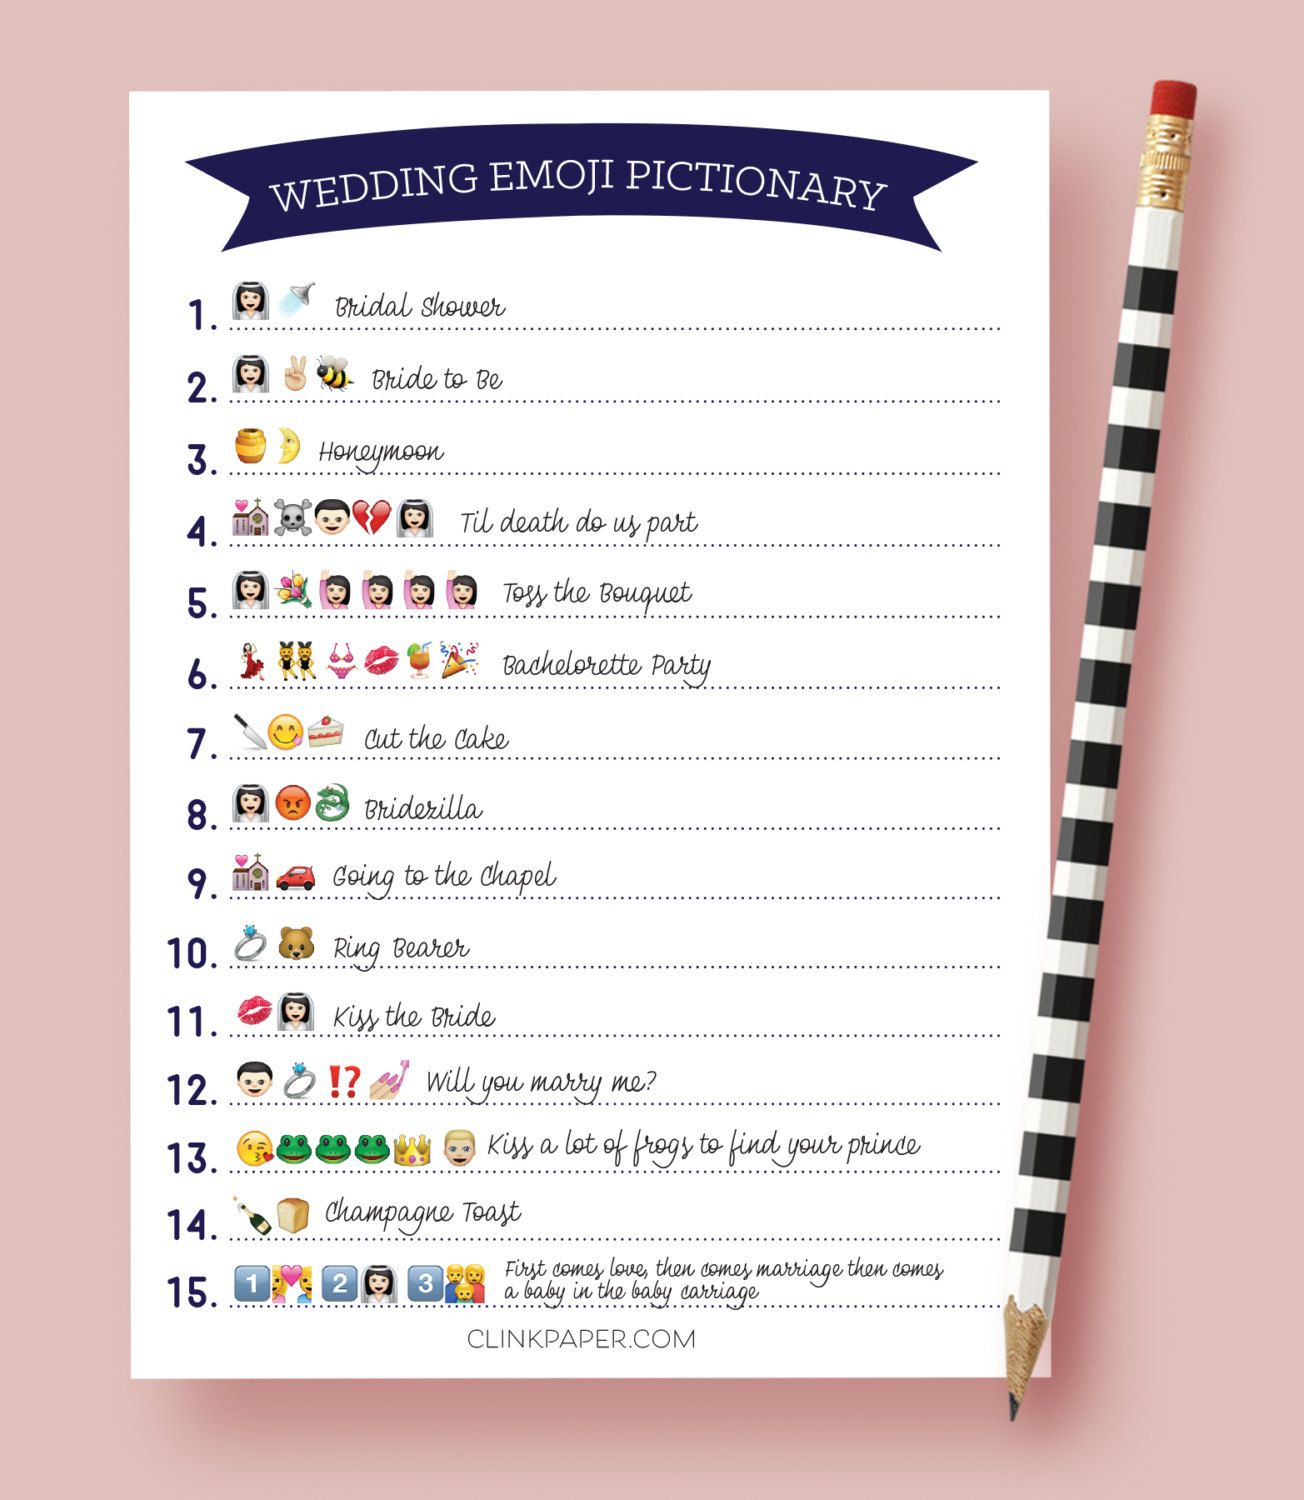 Creative Bridal Shower Games 42 | Wedding Things To Keep In 2019 - Wedding Emoji Pictionary Free Printable